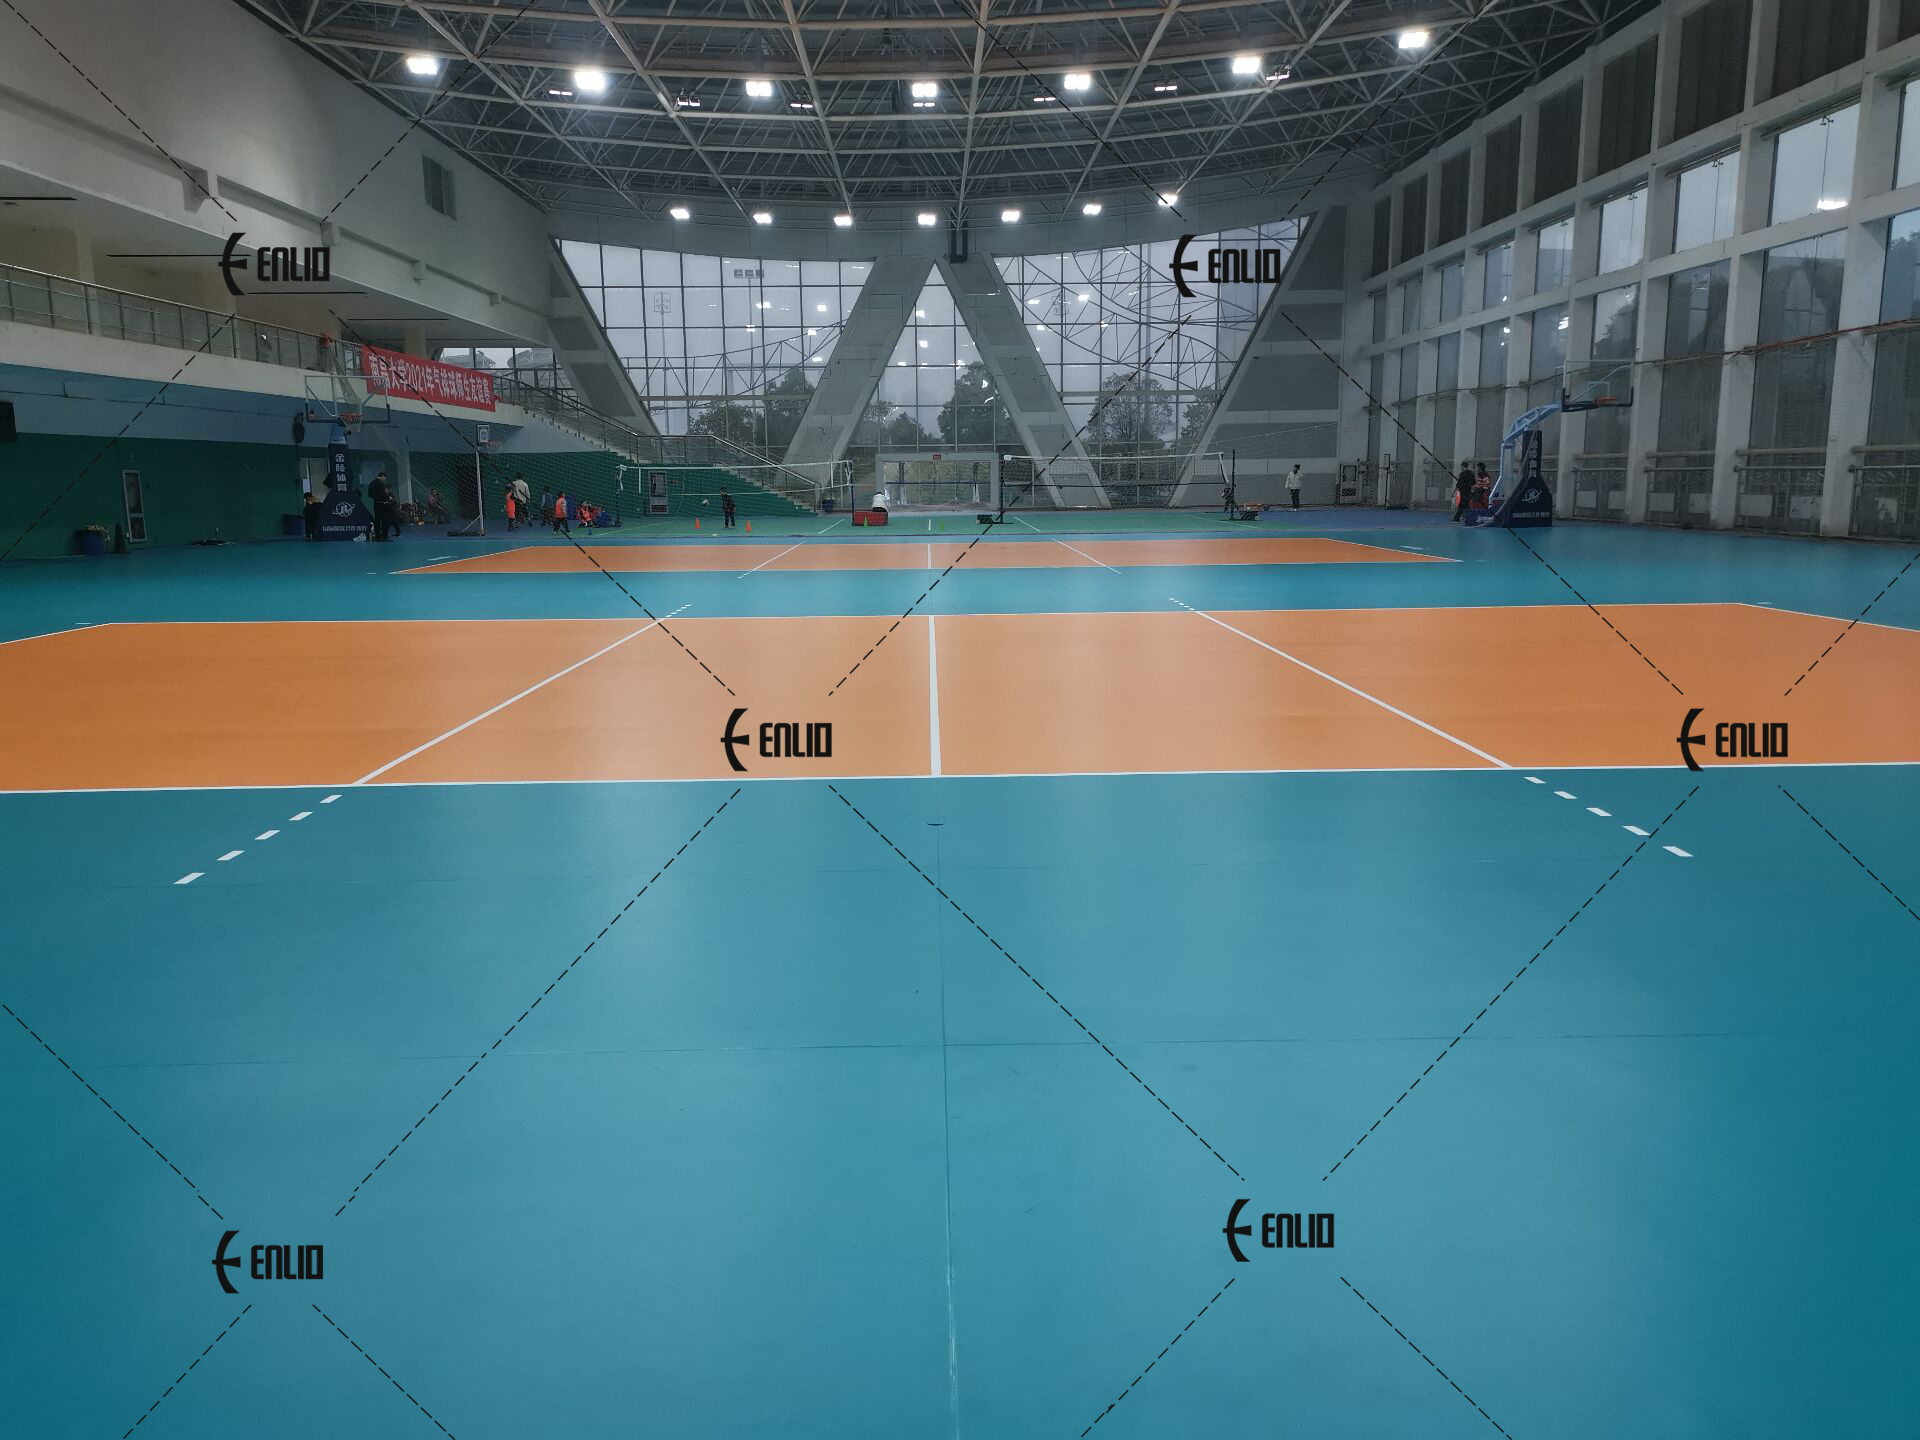 Enlio volleyball court mat